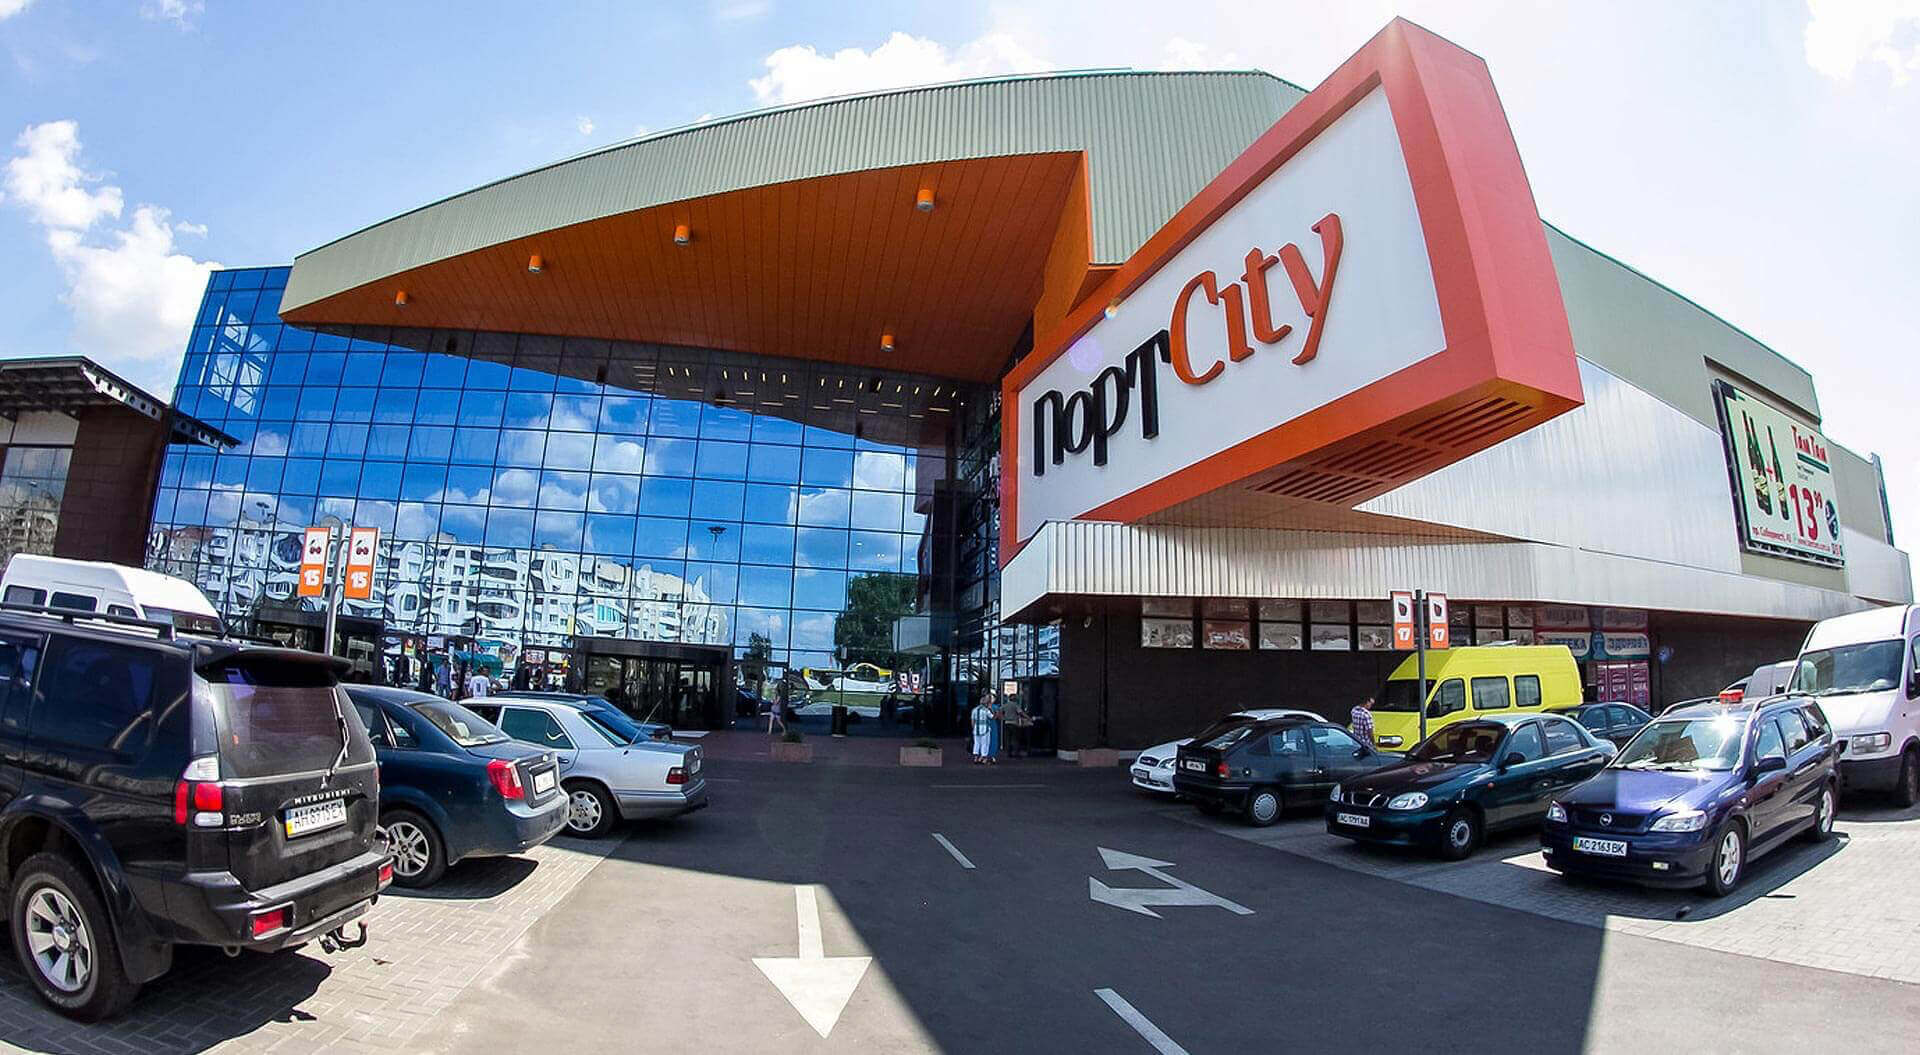 Port City Shopping Mall branding and customer car park navigation system Lutsk